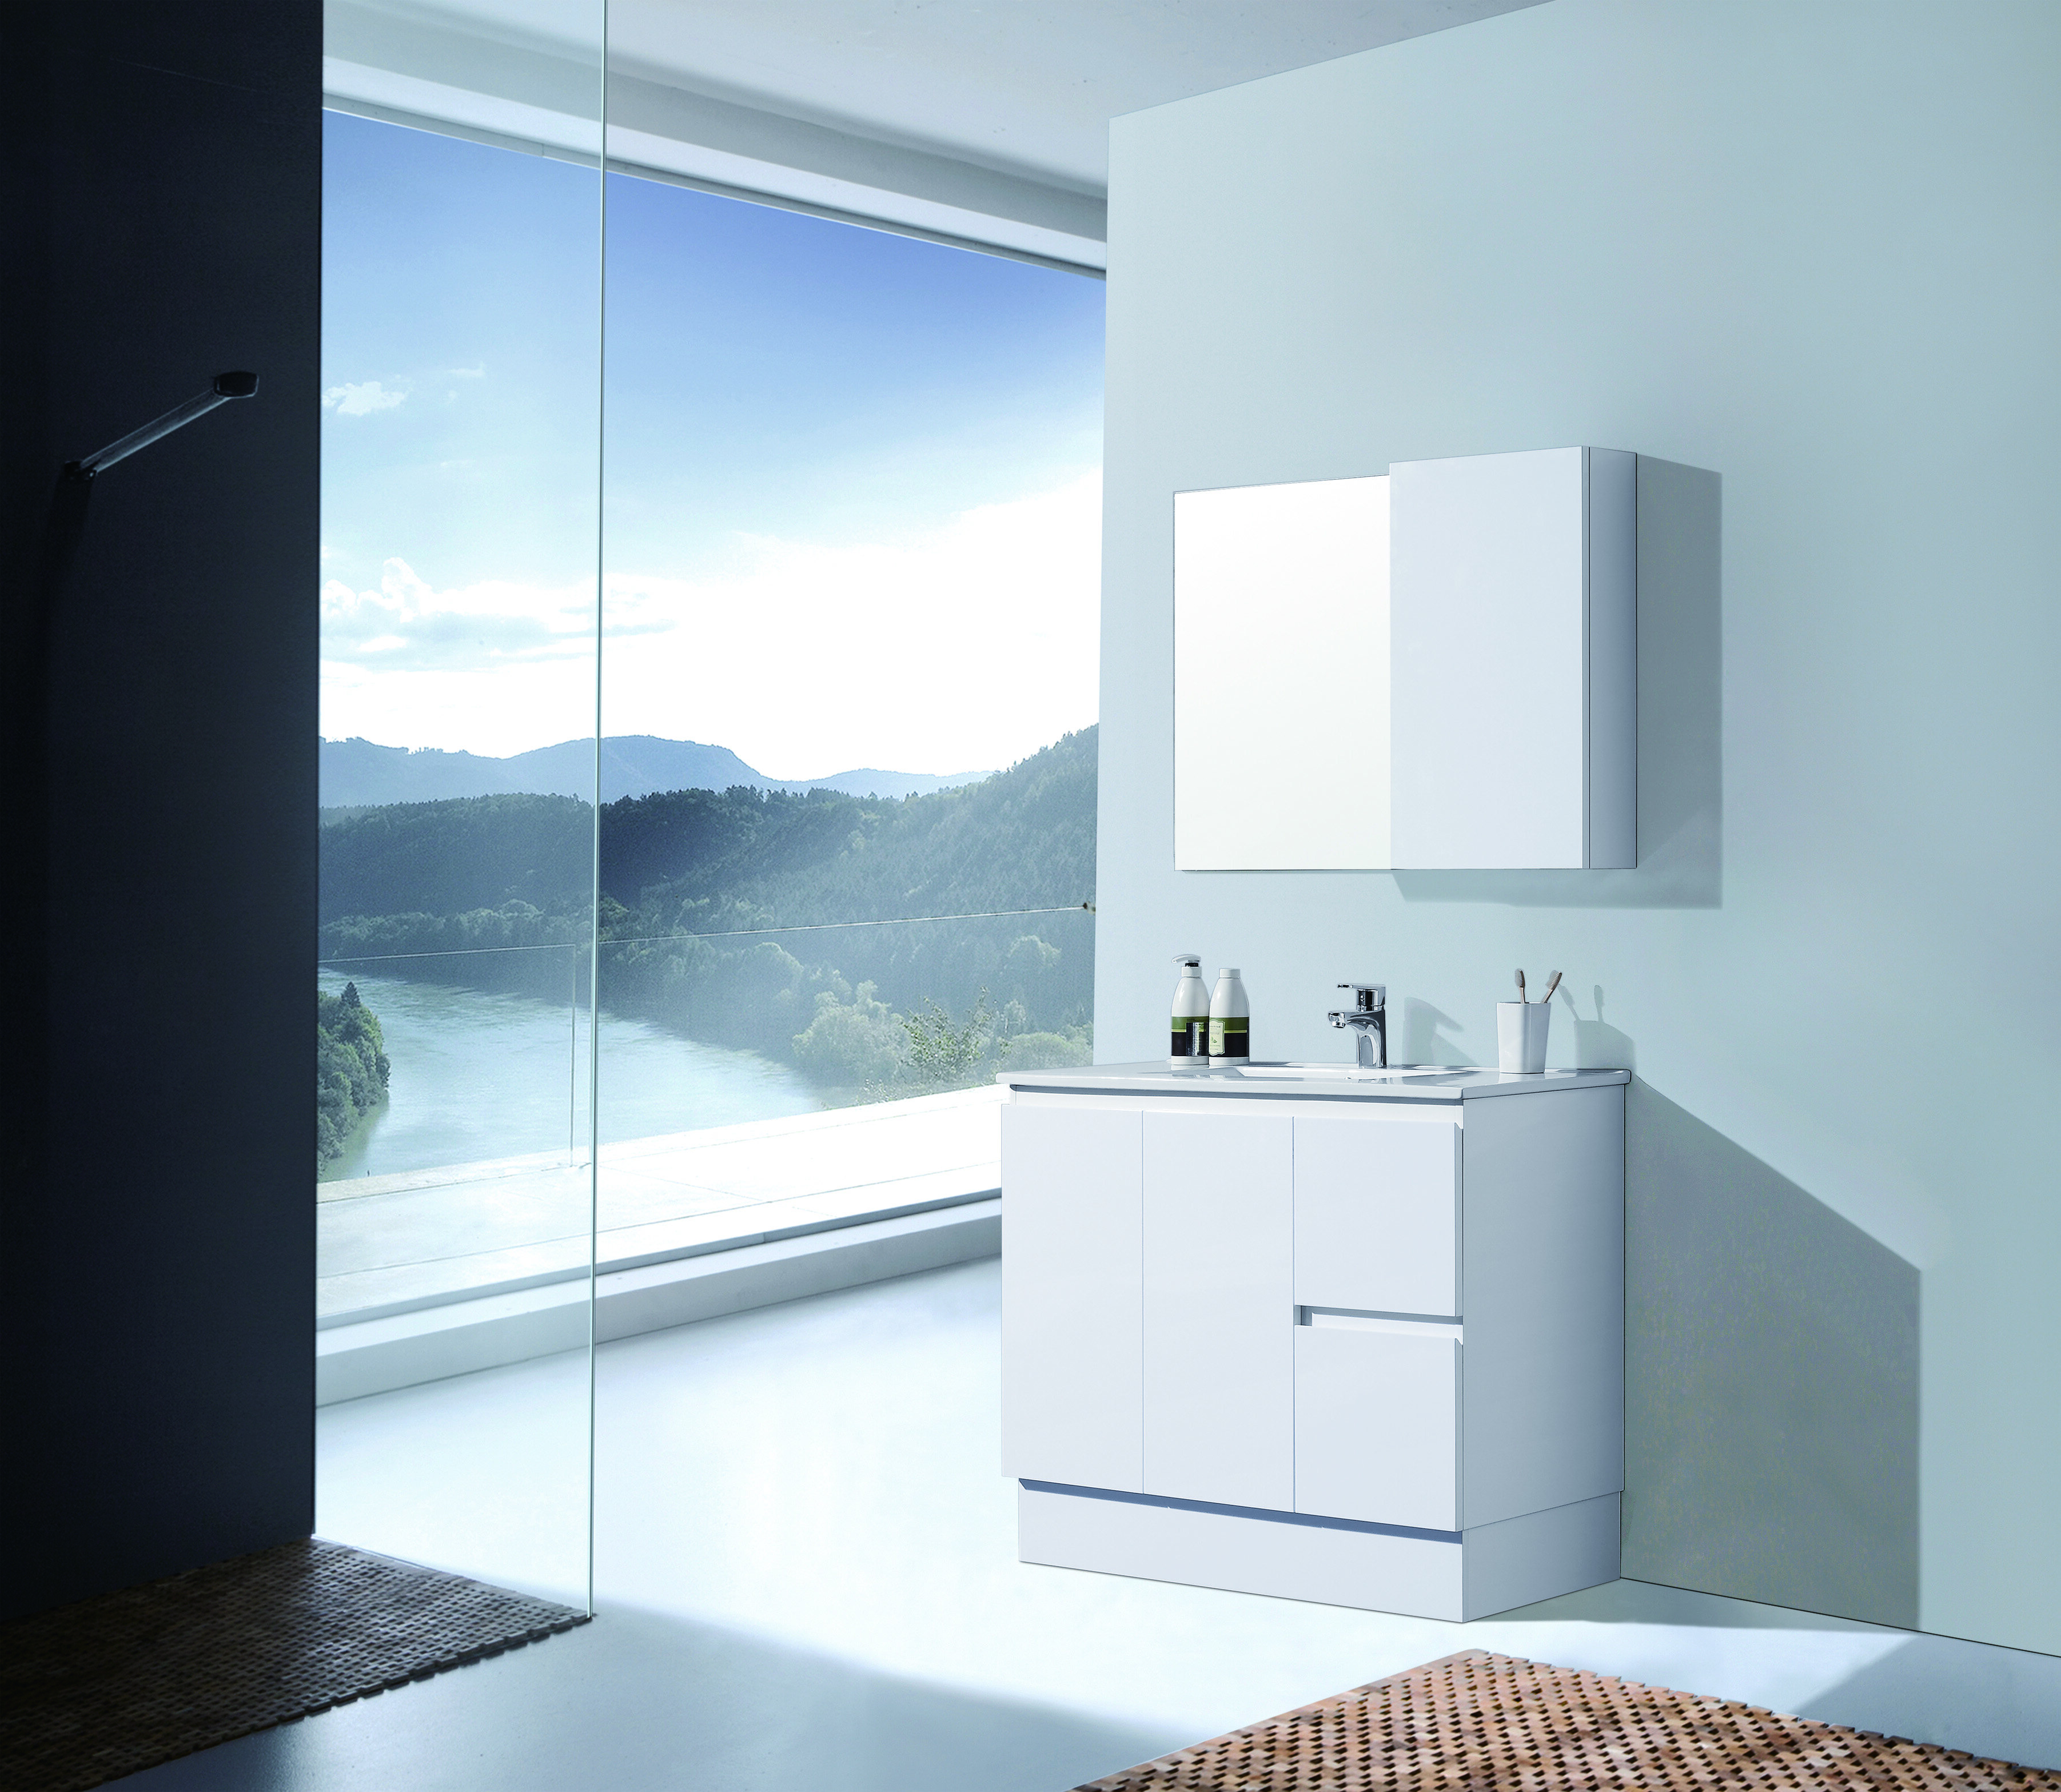 Hotel Luxury Vanity/Apartment Project  Bathroom Cabinet